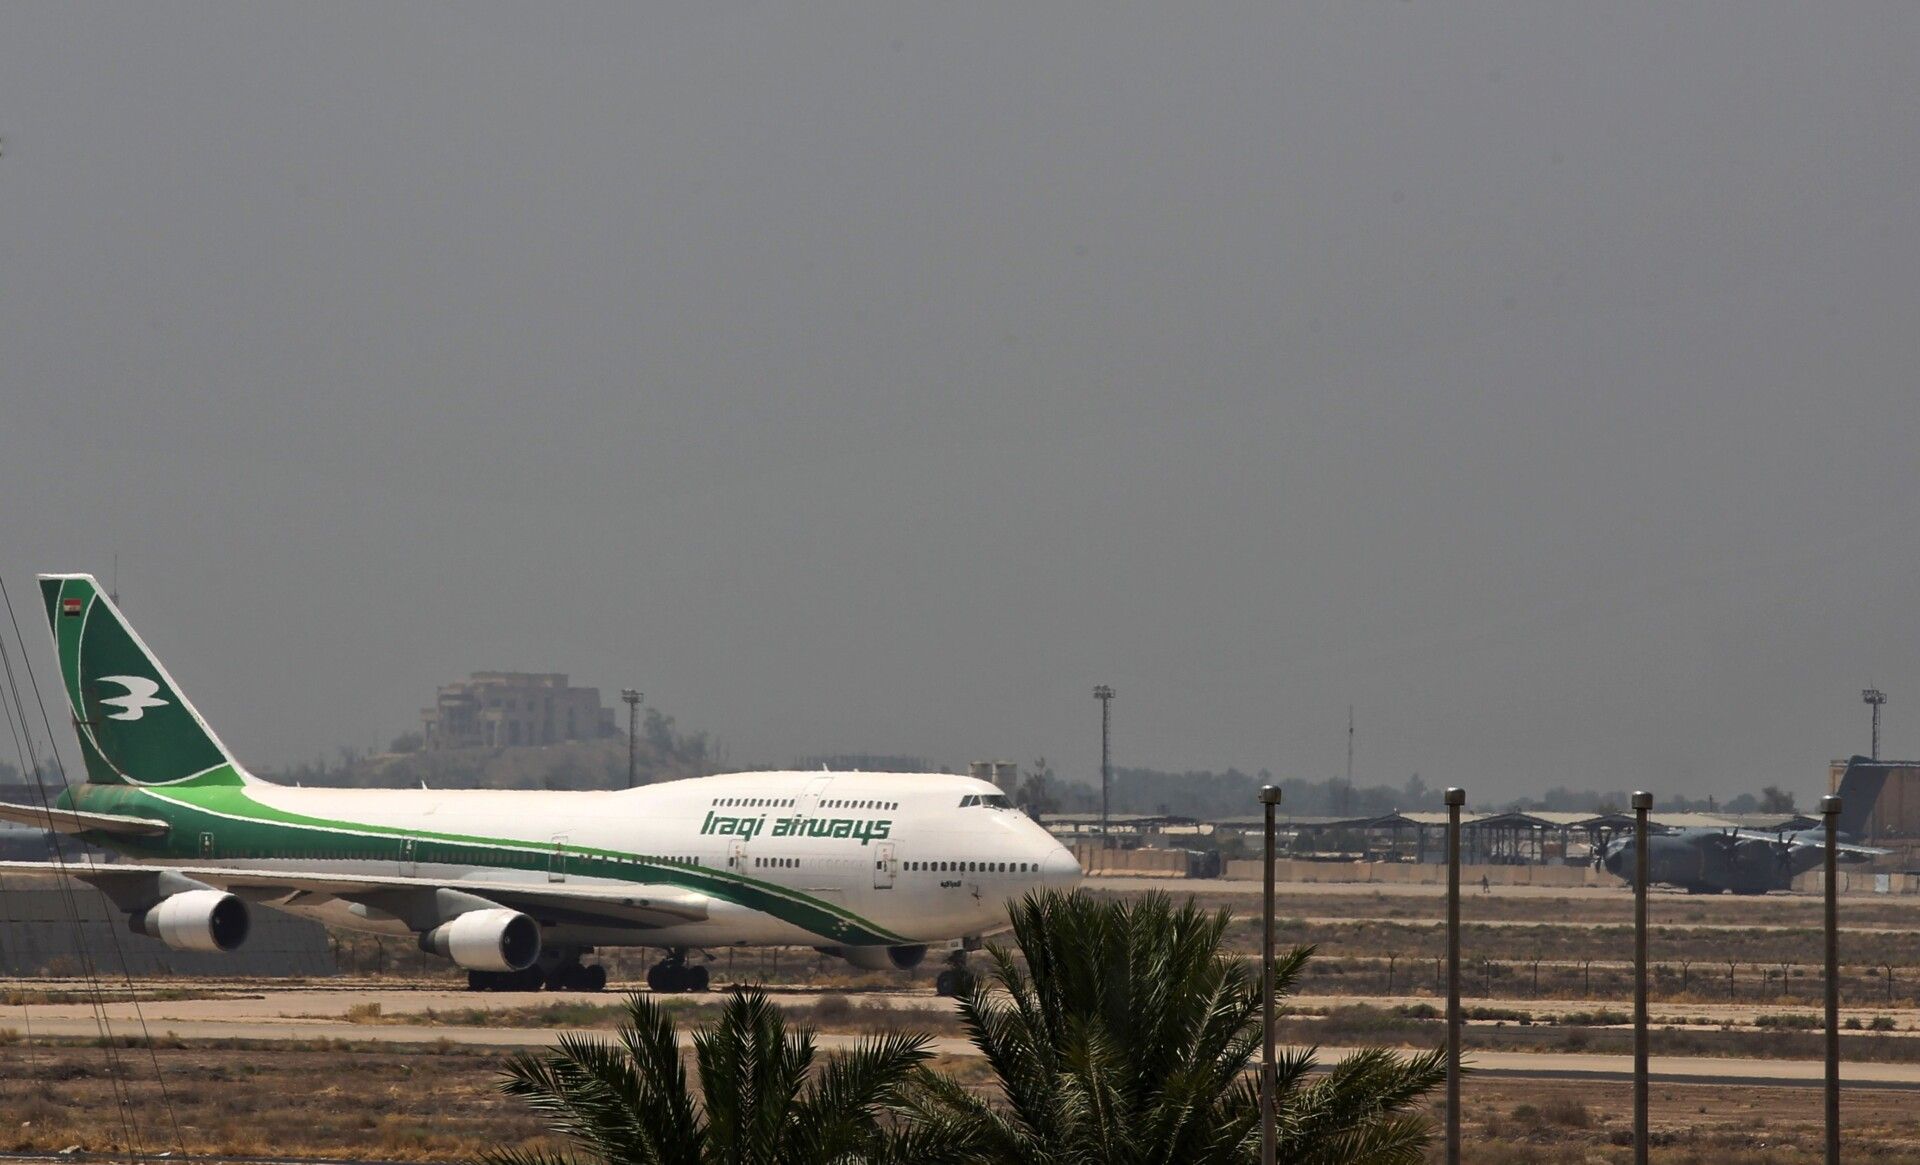 Iraqi Airways BOEING 747-400 Passenger Airplane Plane Aircraft Diecast Model 